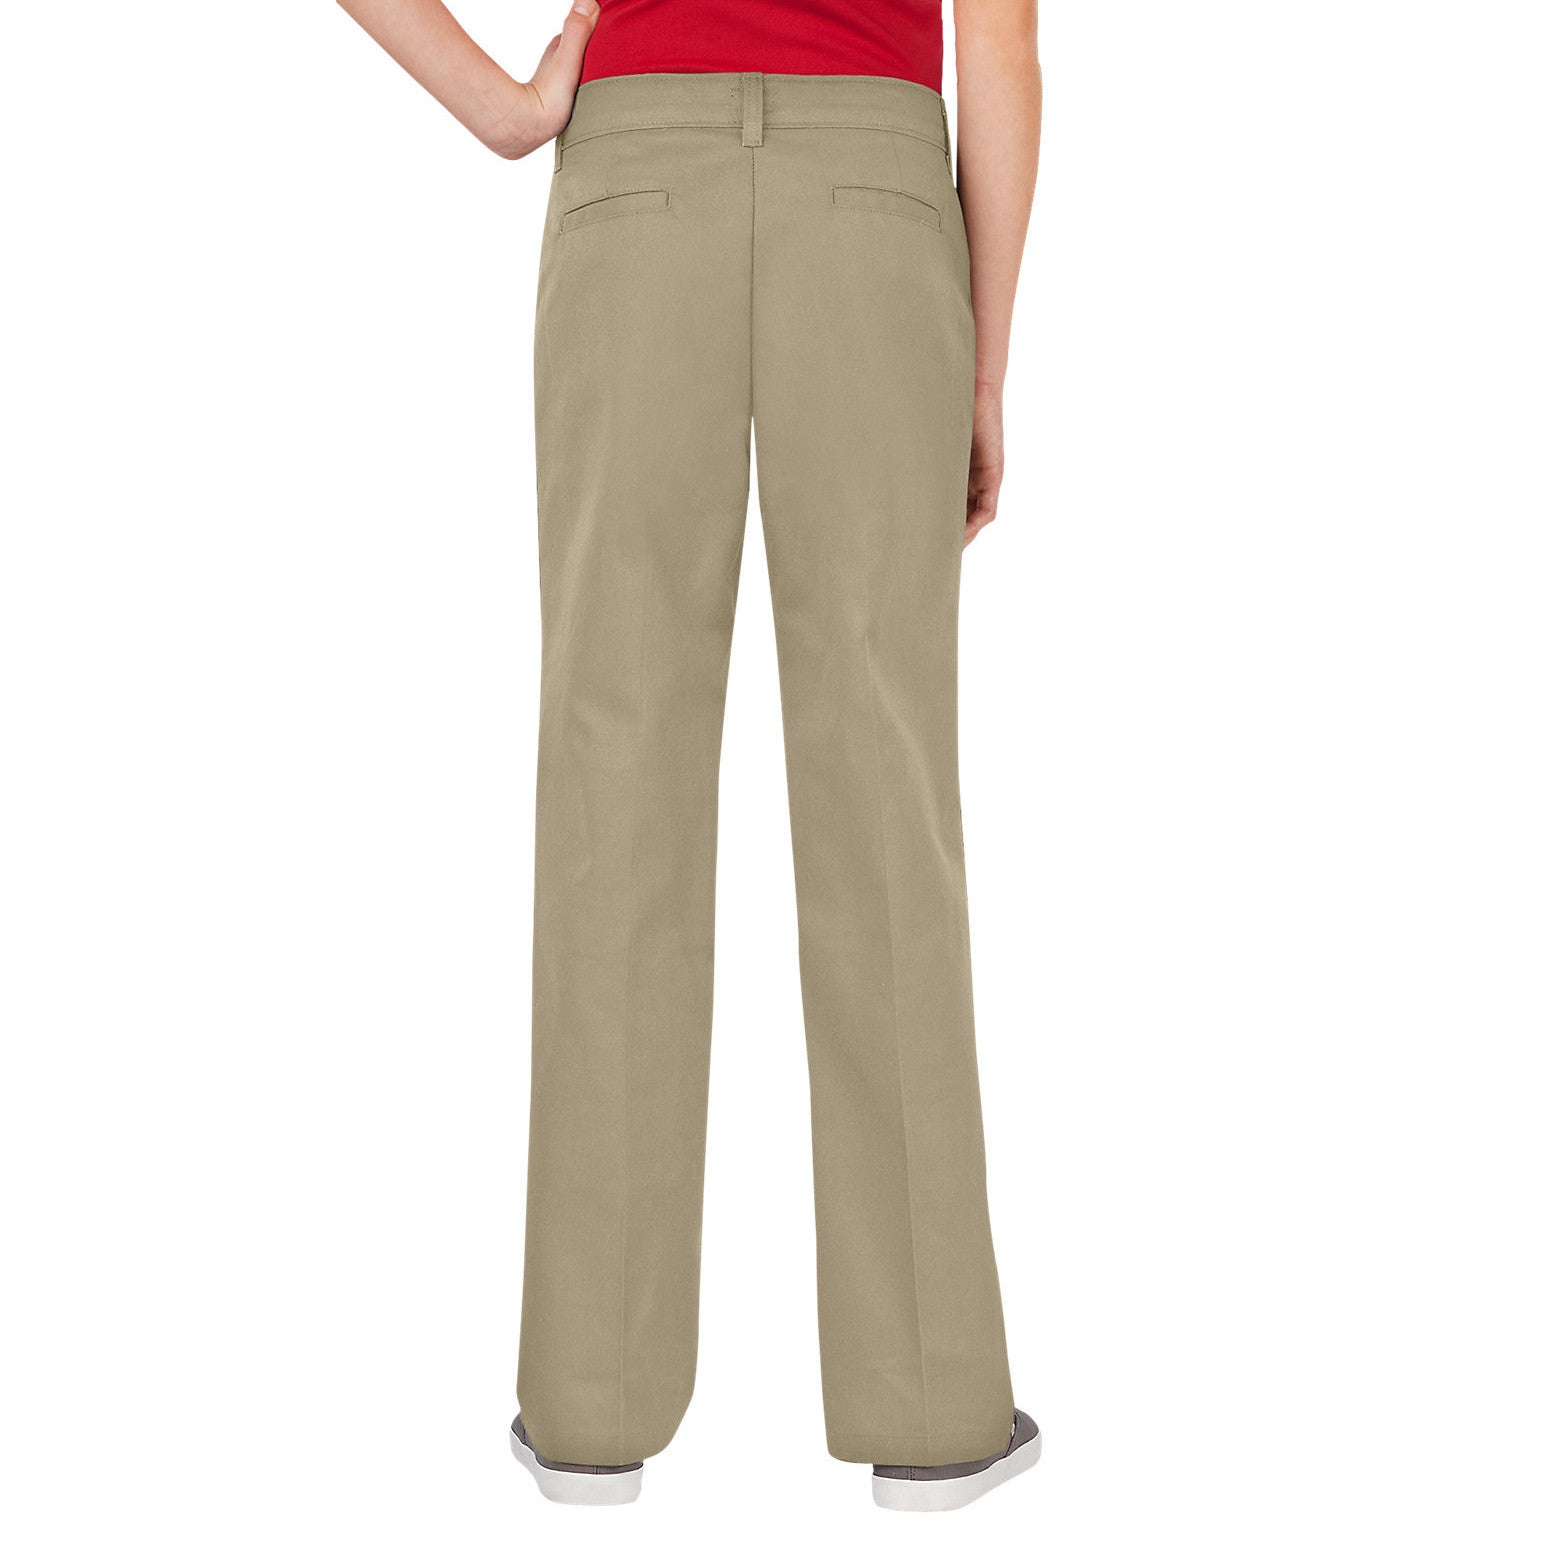 Girls FlexWaist® Slim Straight Flat Front Pant Dickies Uniform Station